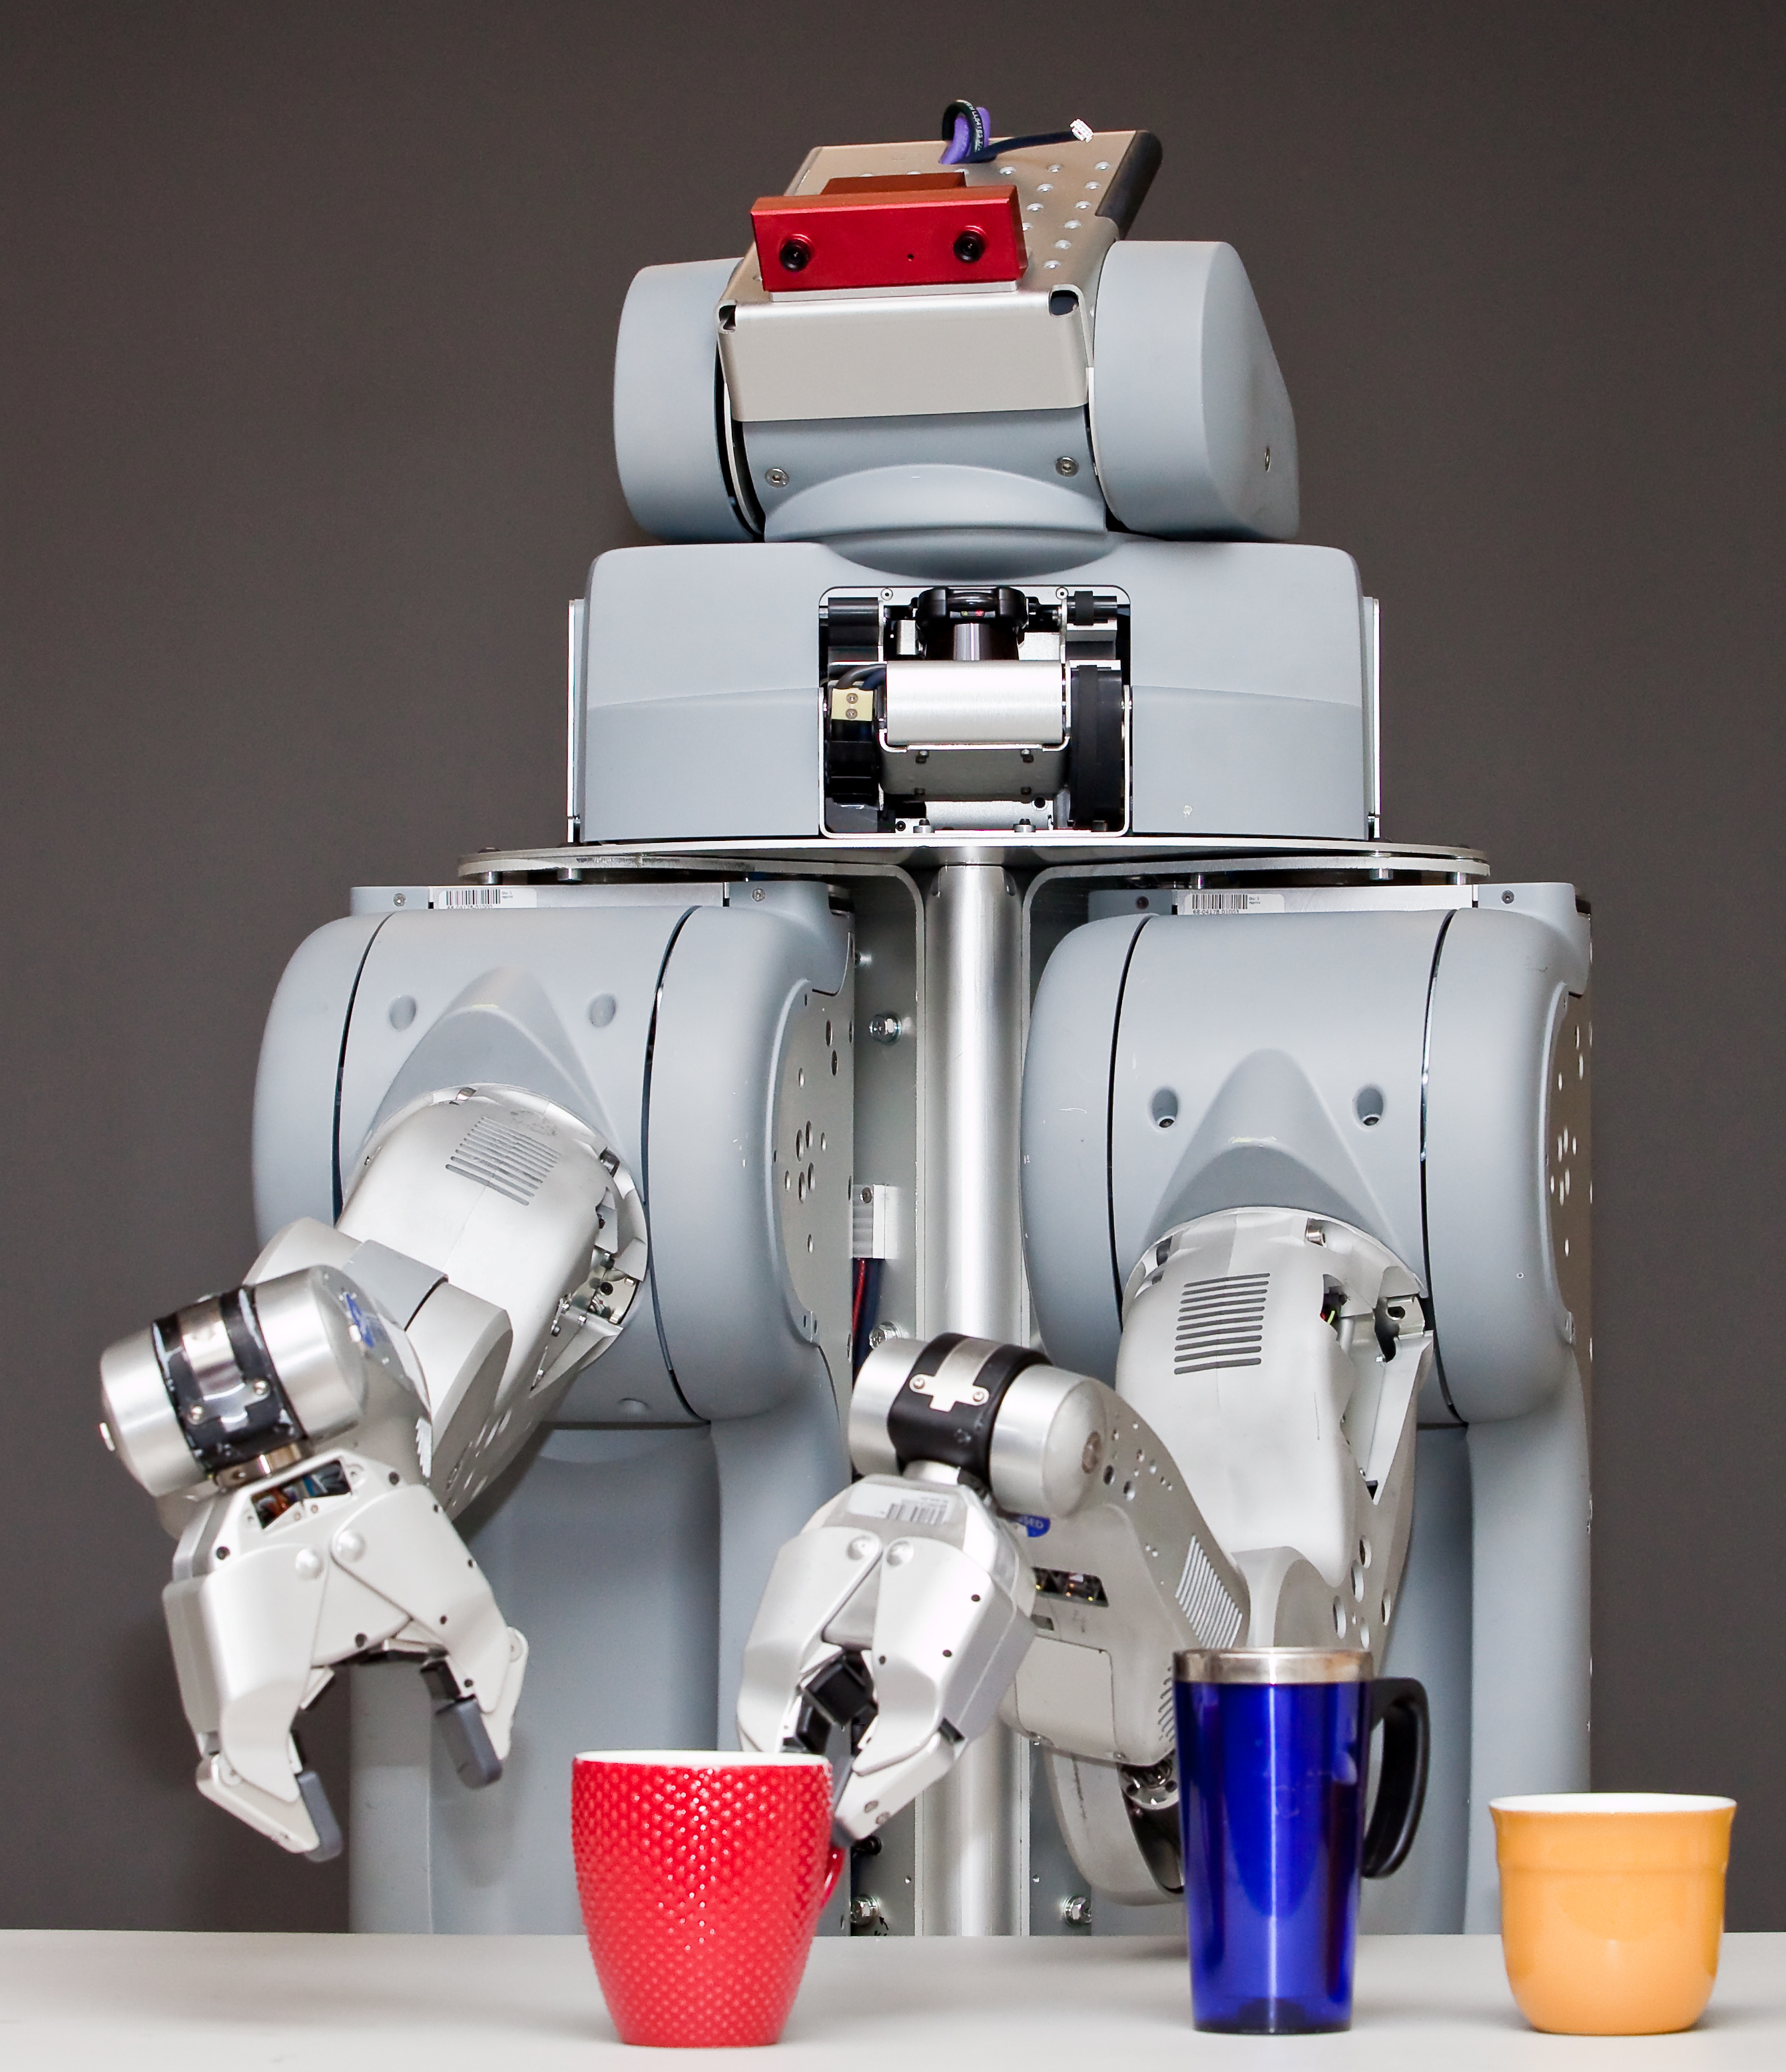 Robot Willow Garage PR2 Approche IA par Behaviorisme.